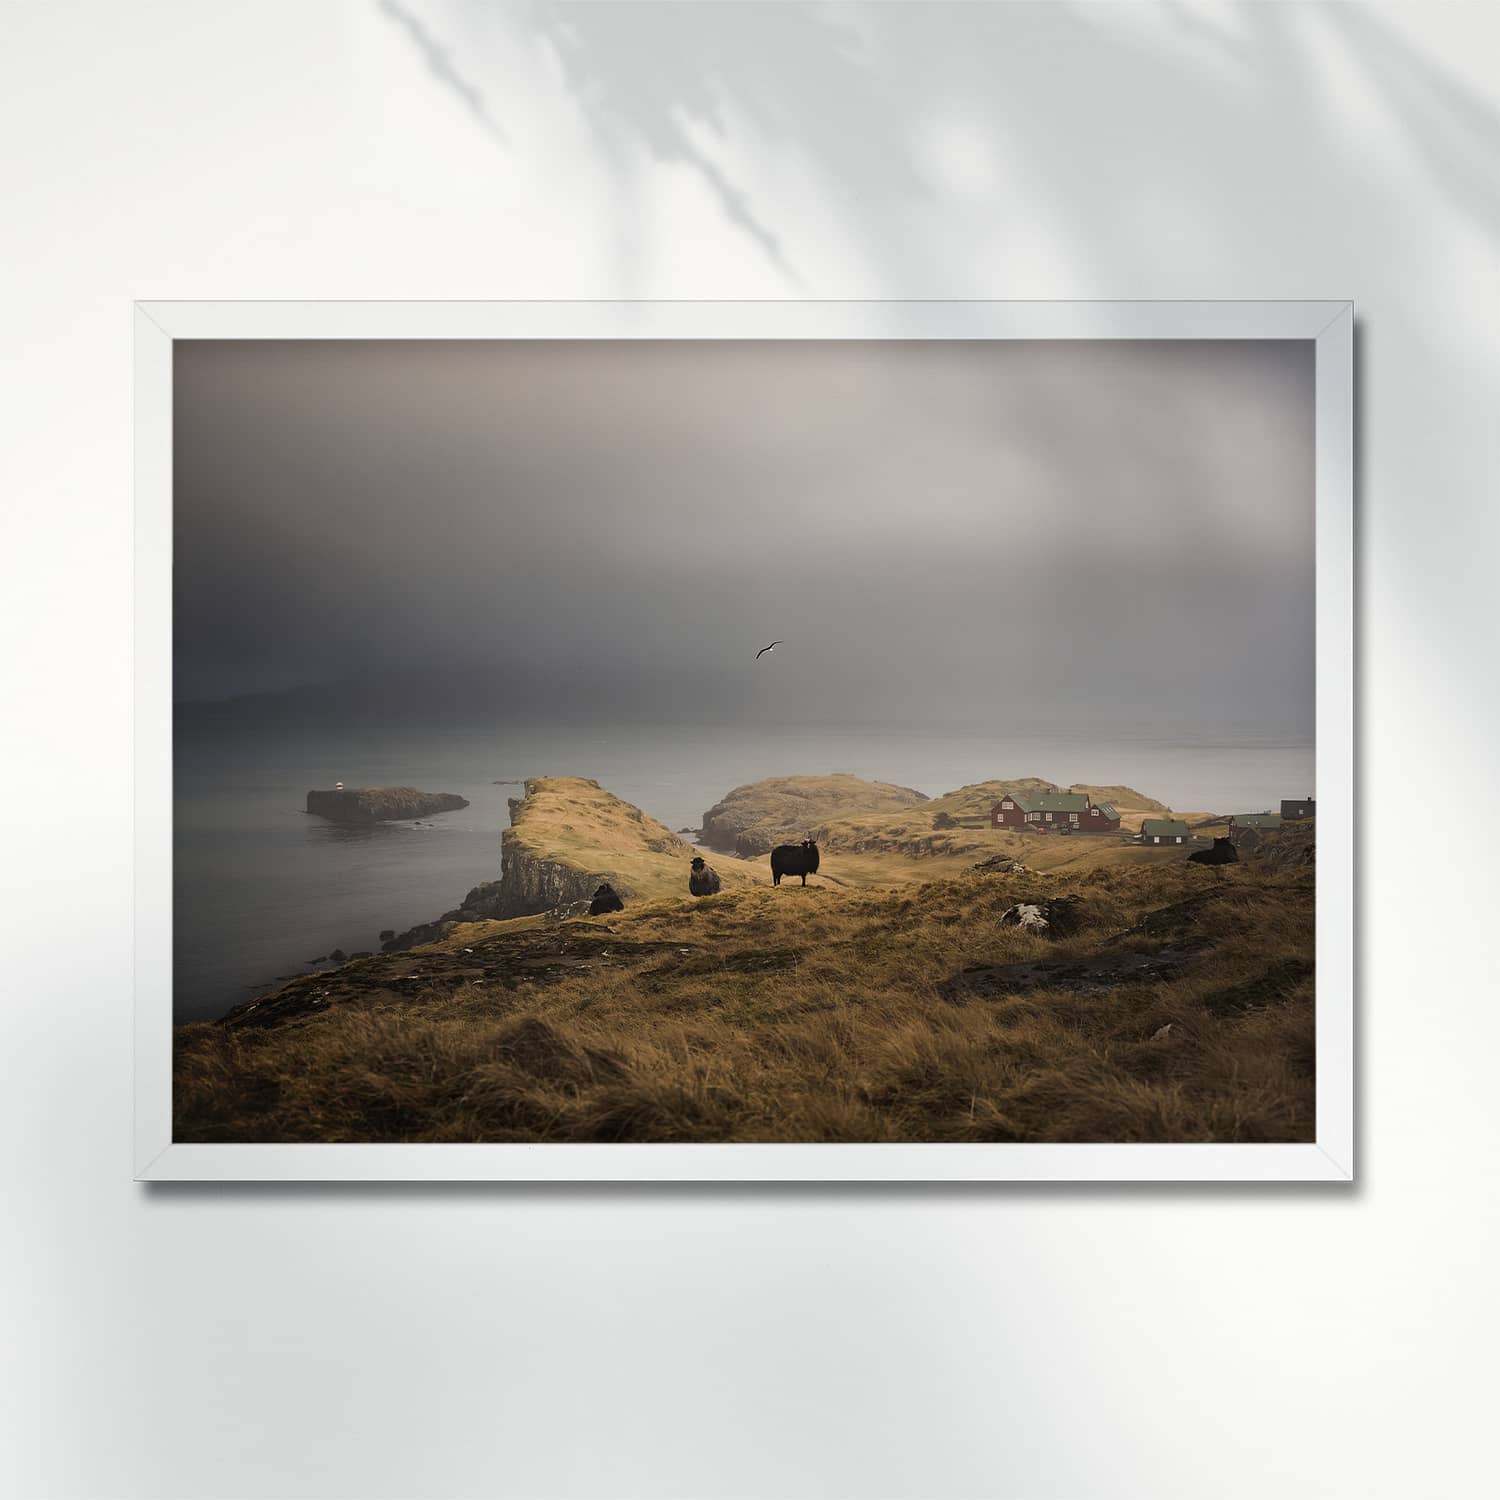 SHEEP IN A MOODY ATMOSPHERE IN HOYVÍK, FAROE ISLANDS - POSTER hoyvik coast lighthouse poster frame 0073